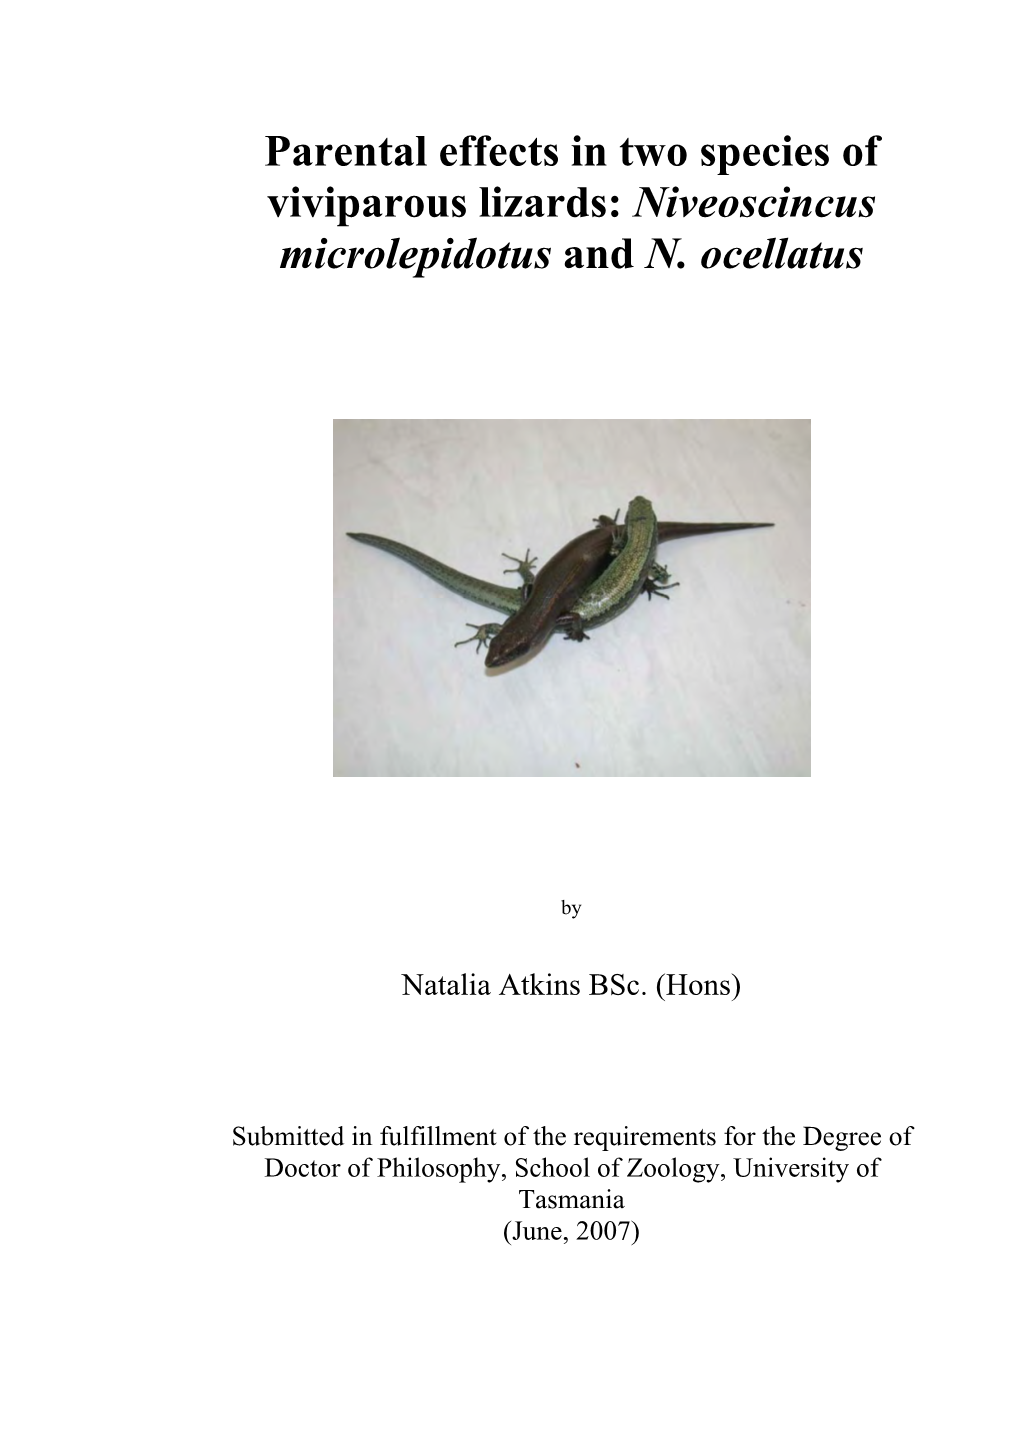 Parental Effects in Two Species of Viviparous Lizards: Niveoscincus Microlepidotus and N